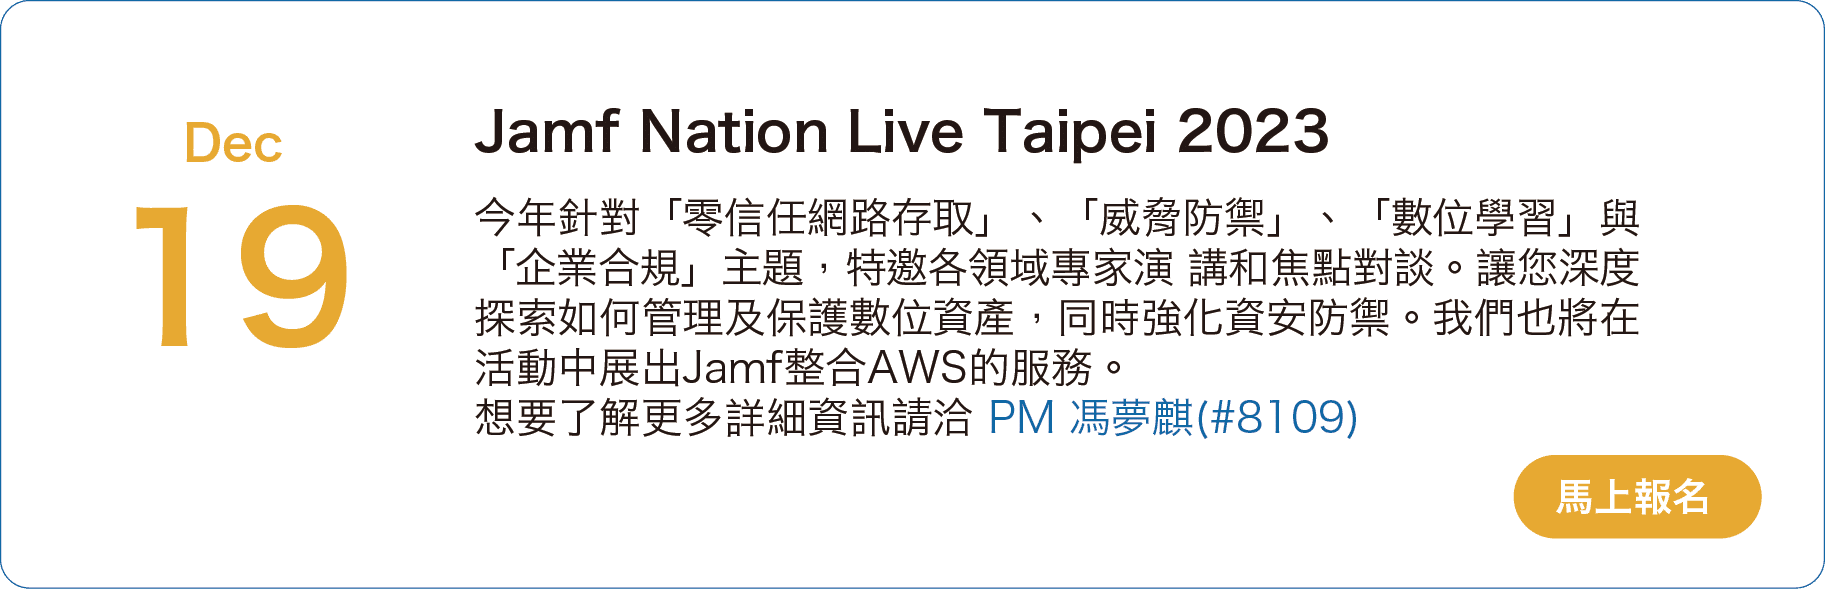 12/19 Jamf Nation Live Taipei 2023